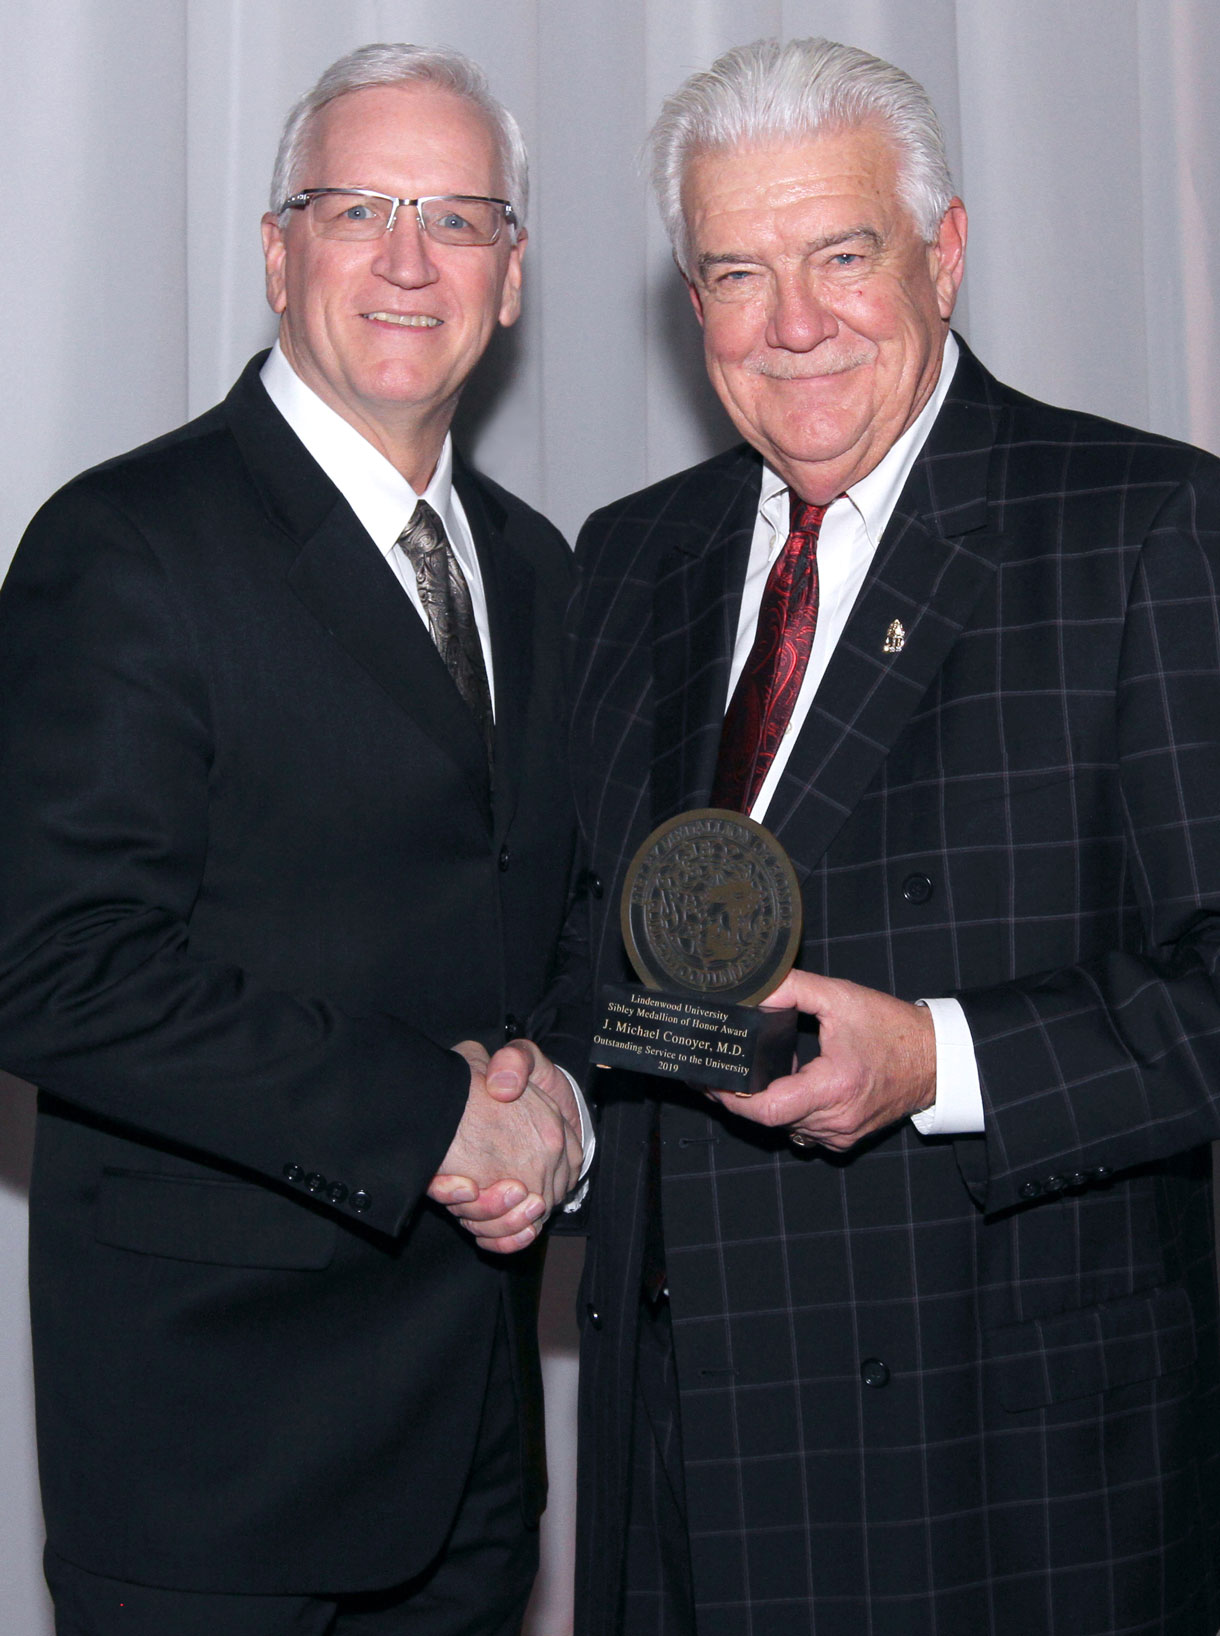 J. Michael Conoyer with President Porter